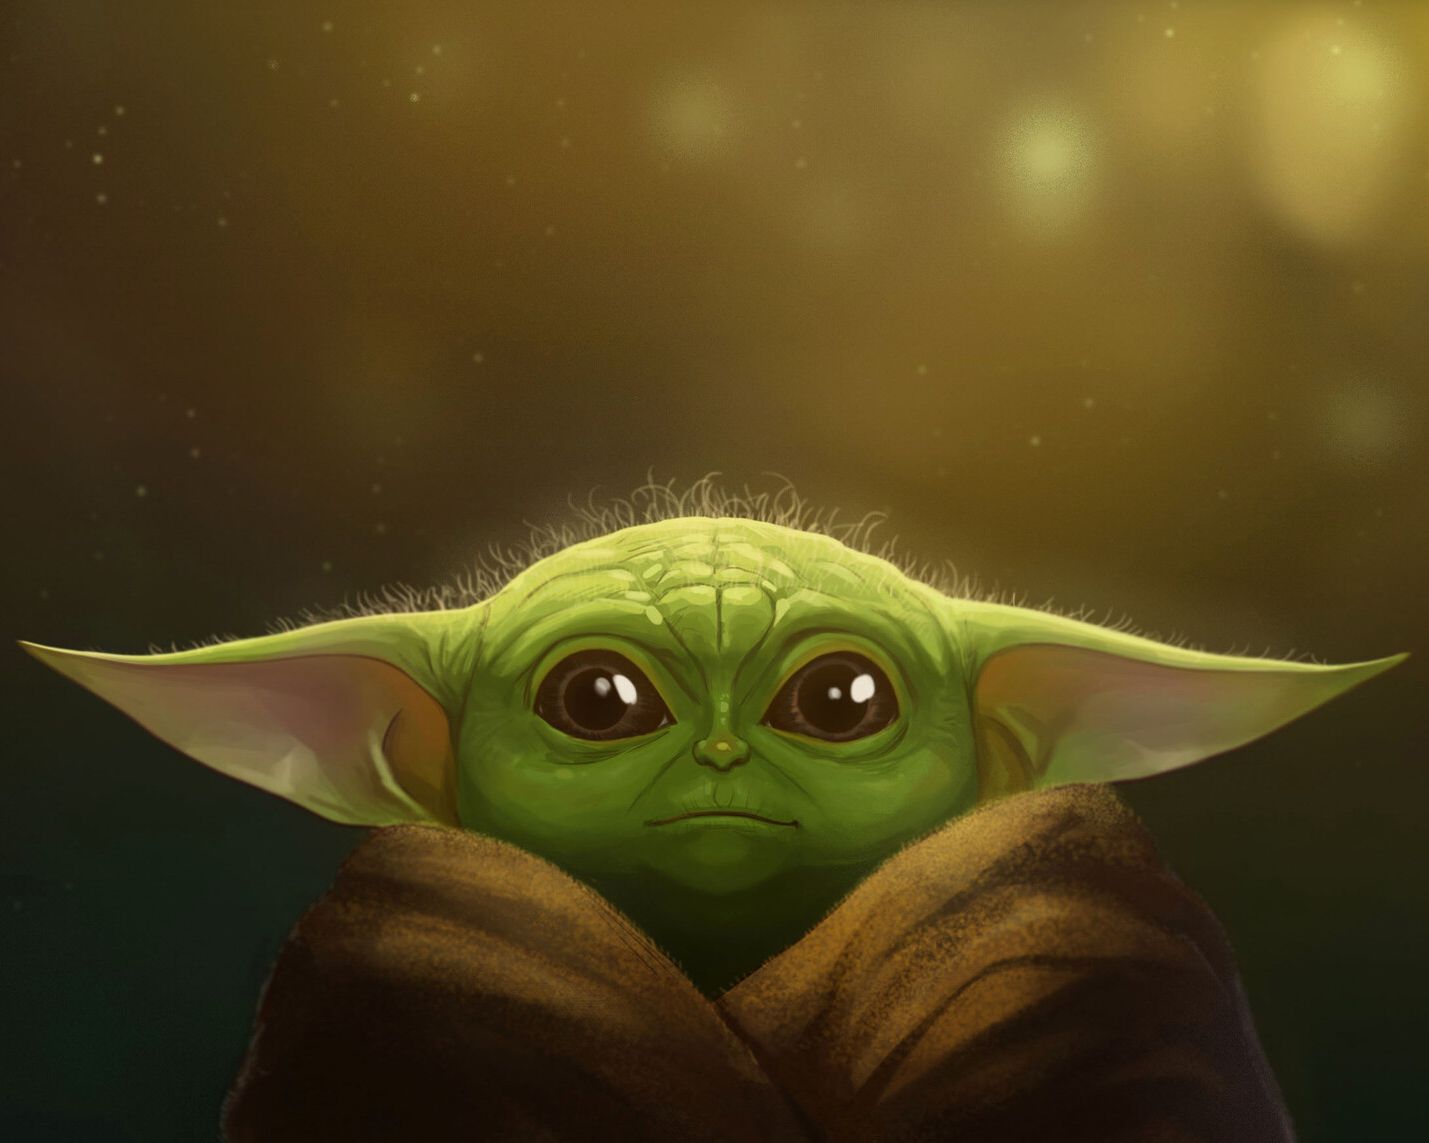 The Mandalorian Baby Yoda Star Wars Wallpapers